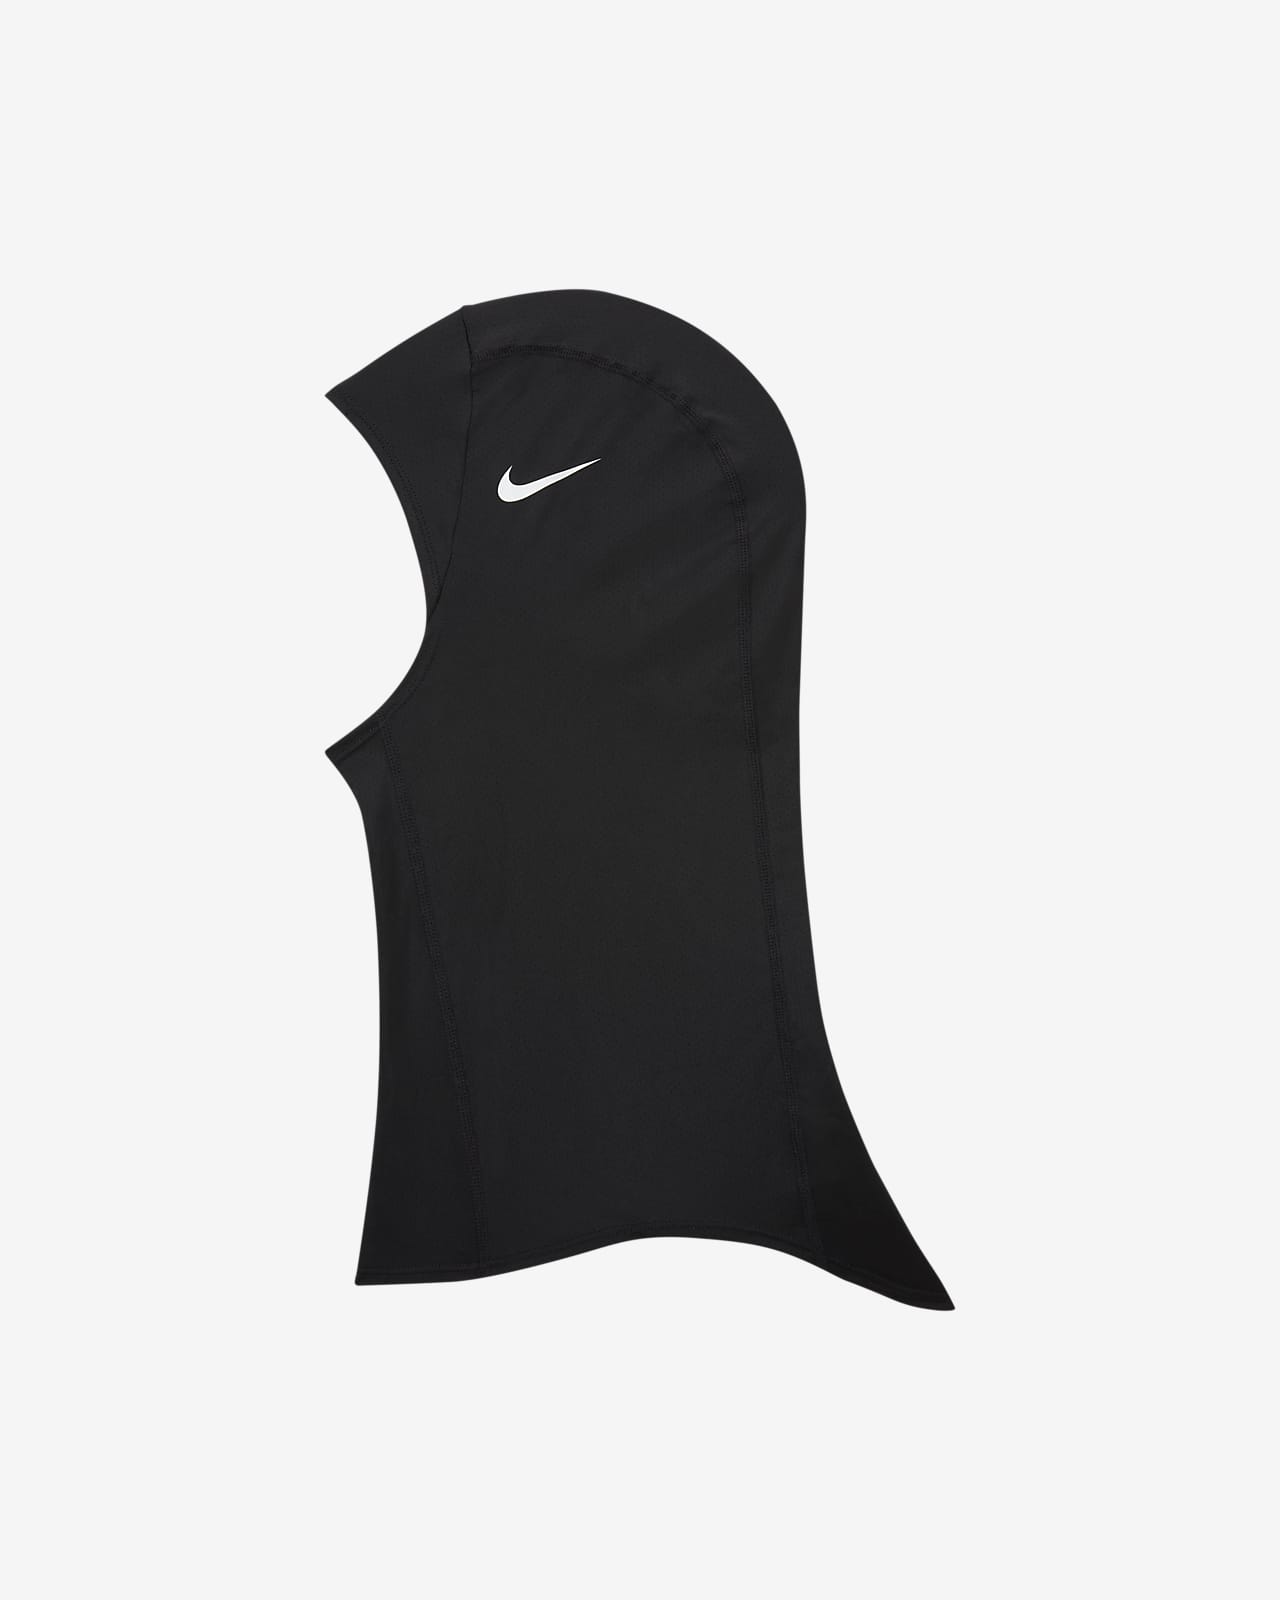 moe voorkant onderschrift Nike Pro Hijab 2.0. Nike.com